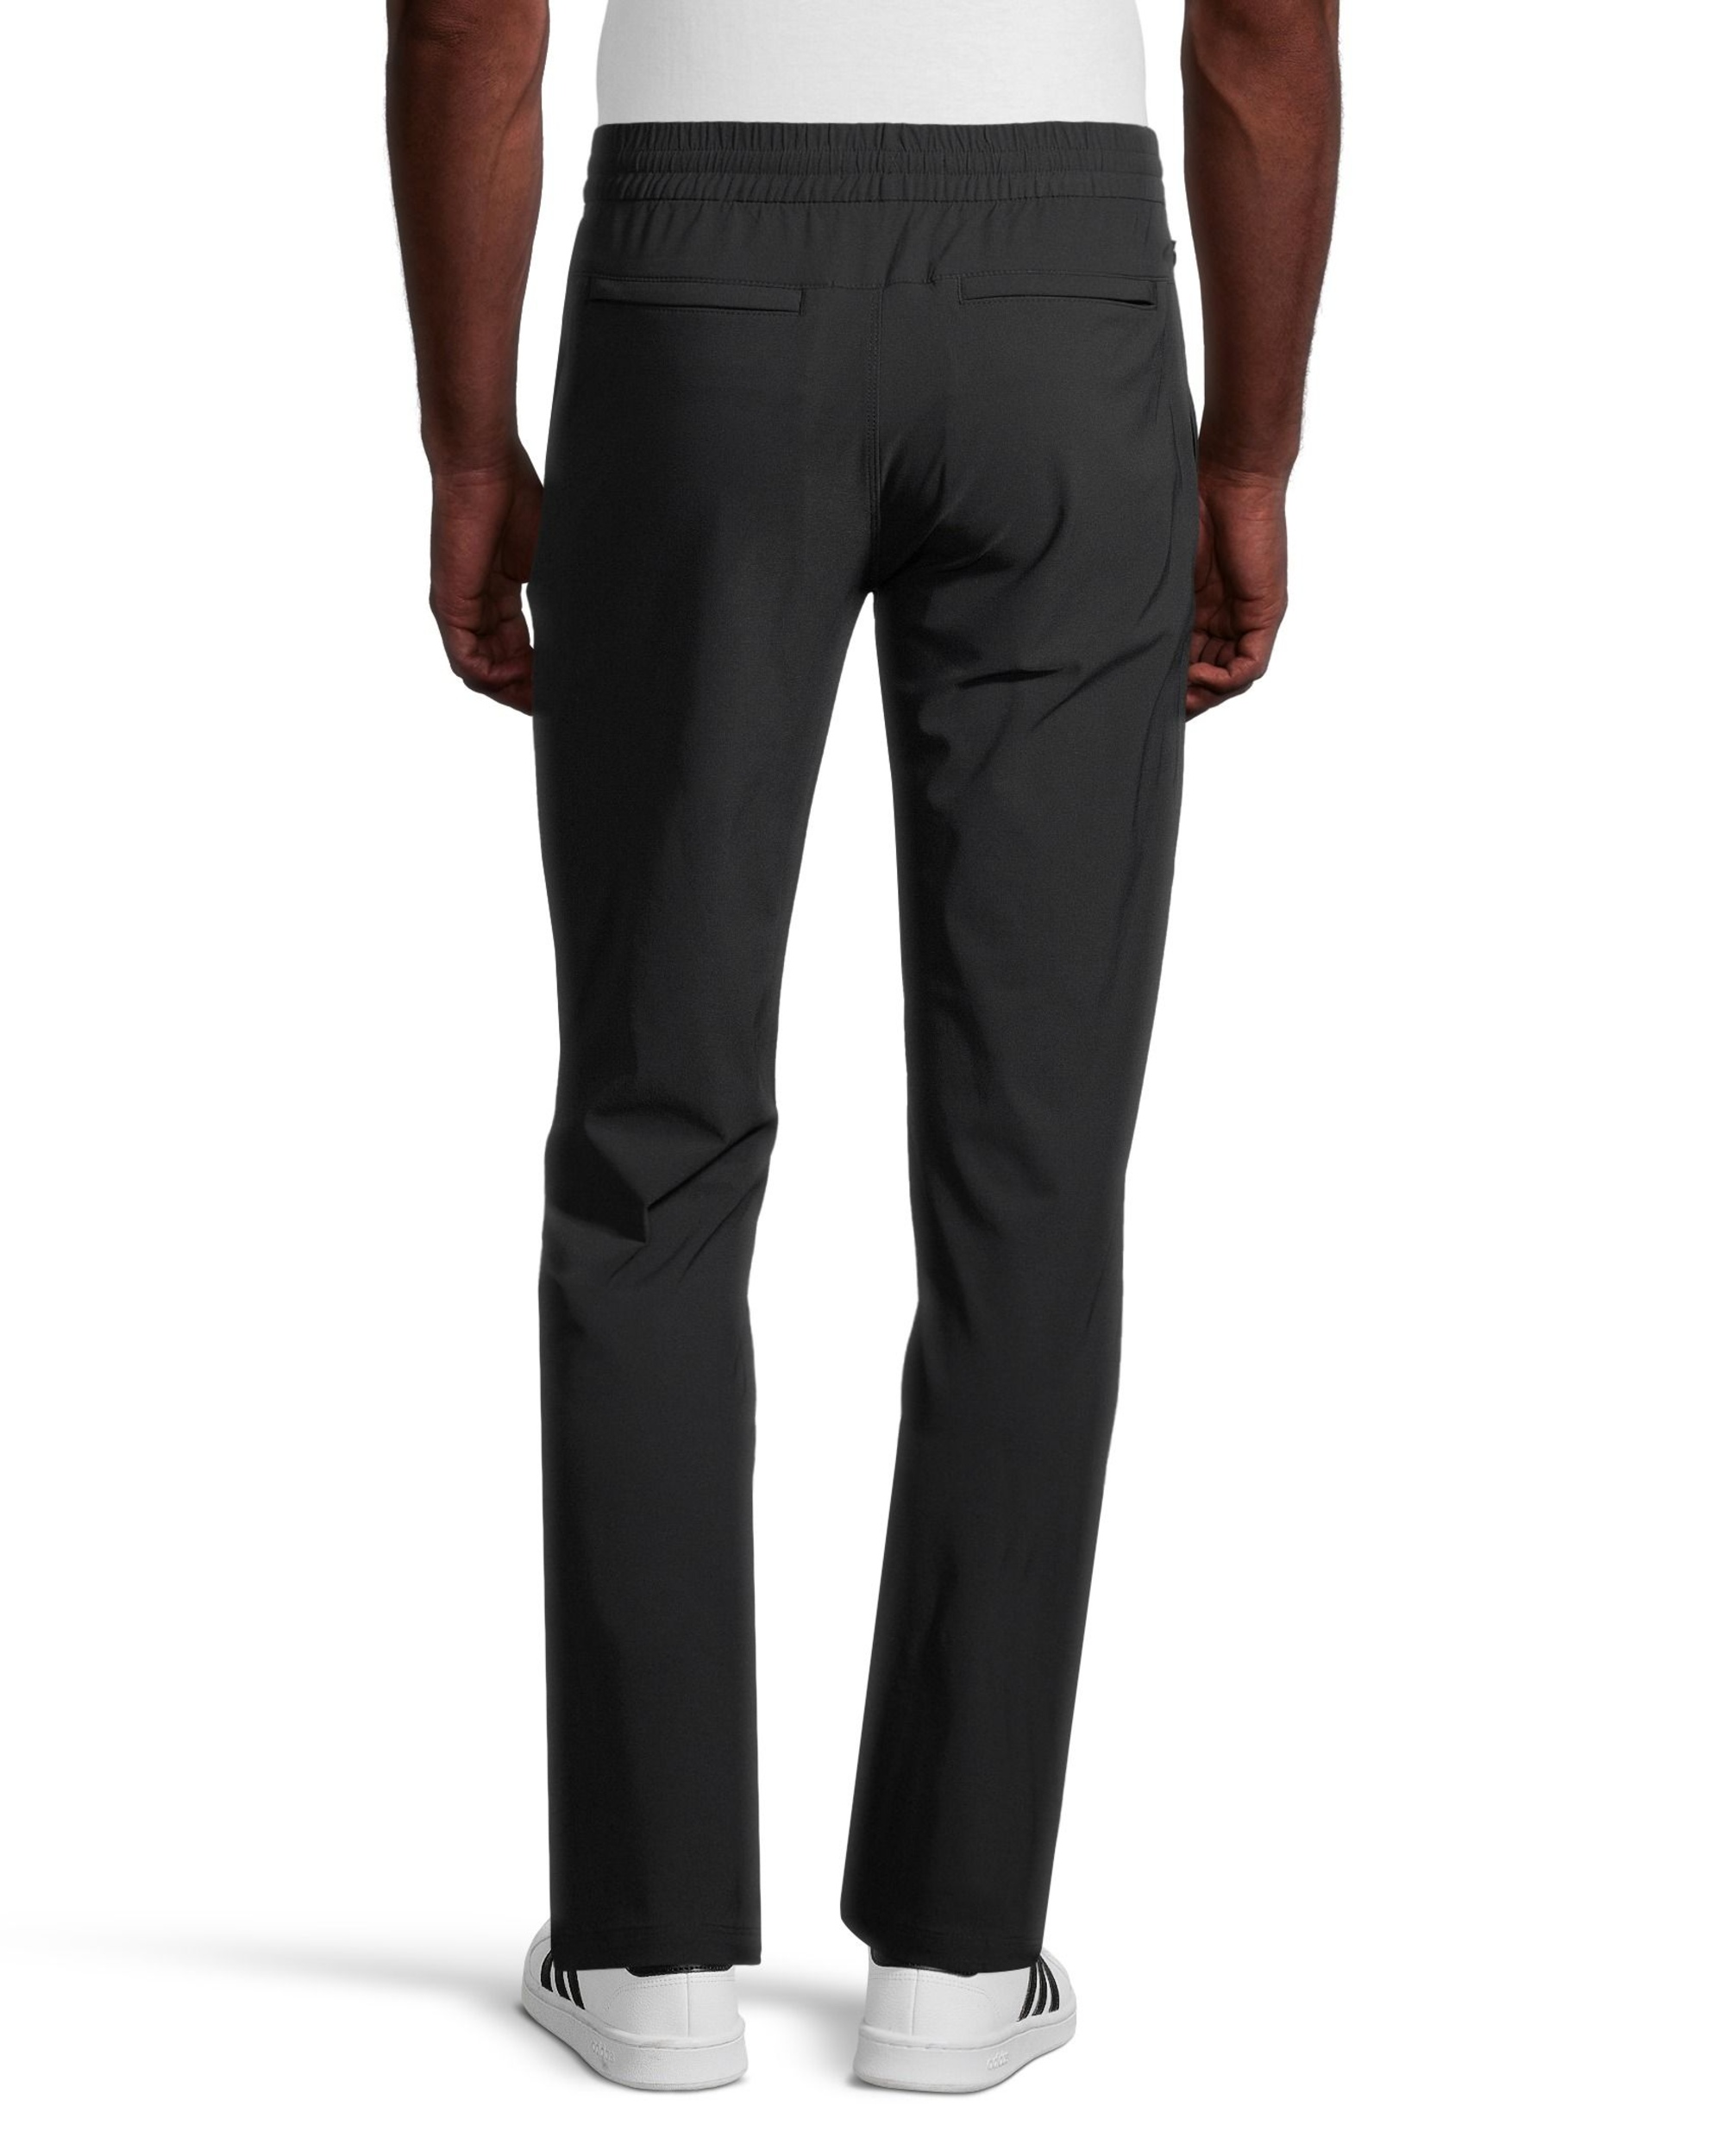 Denver Hayes Men's Athletic Hybrid Comfort Dry FreshTech Pants | Marks